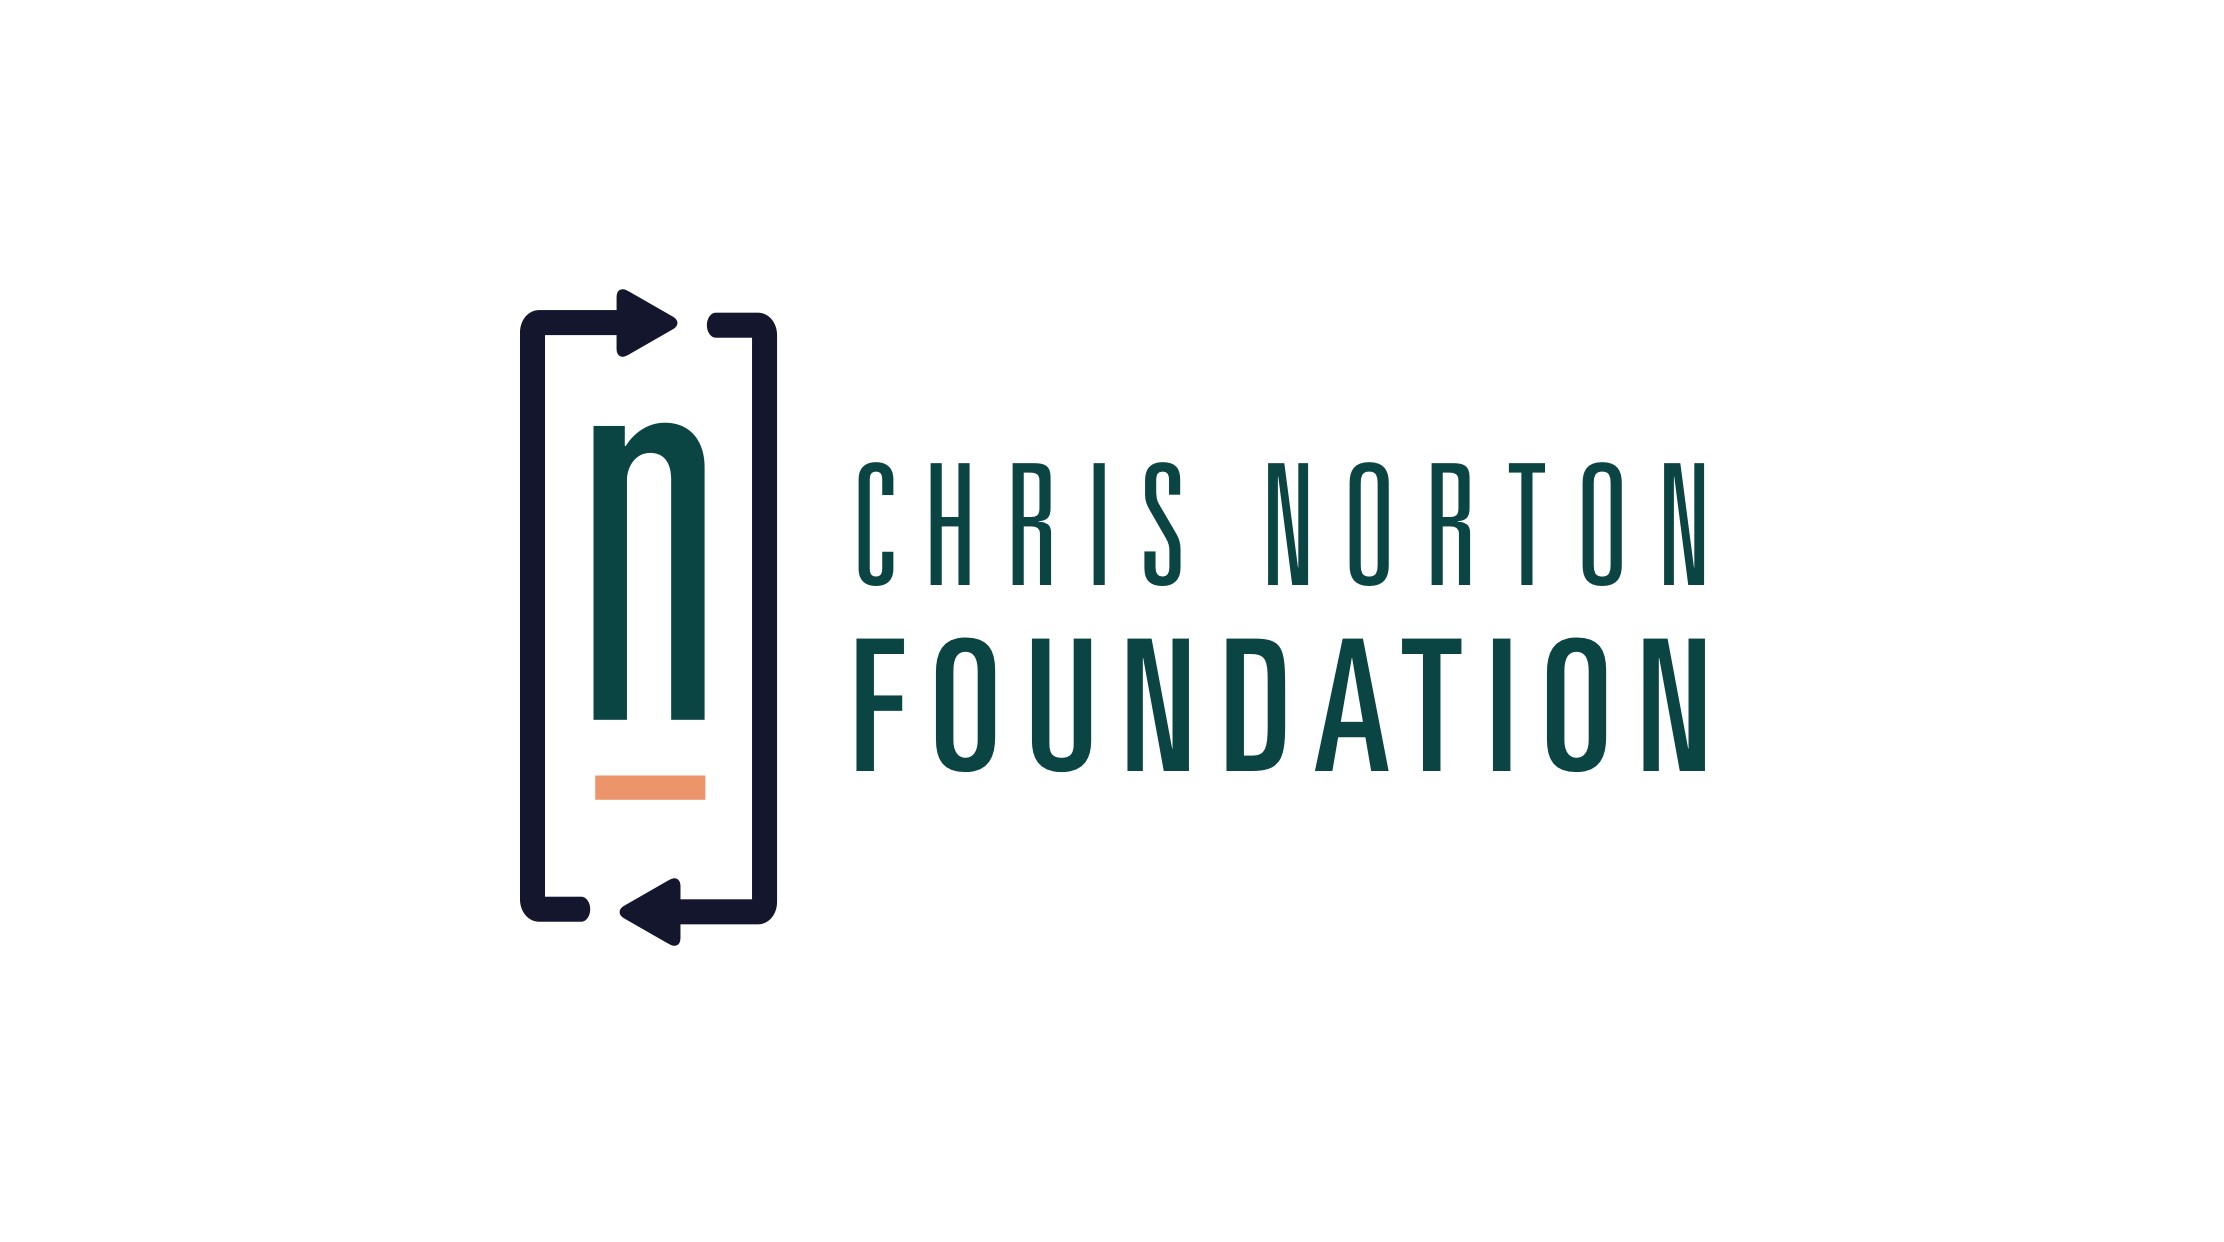 Chris norton foundation logo